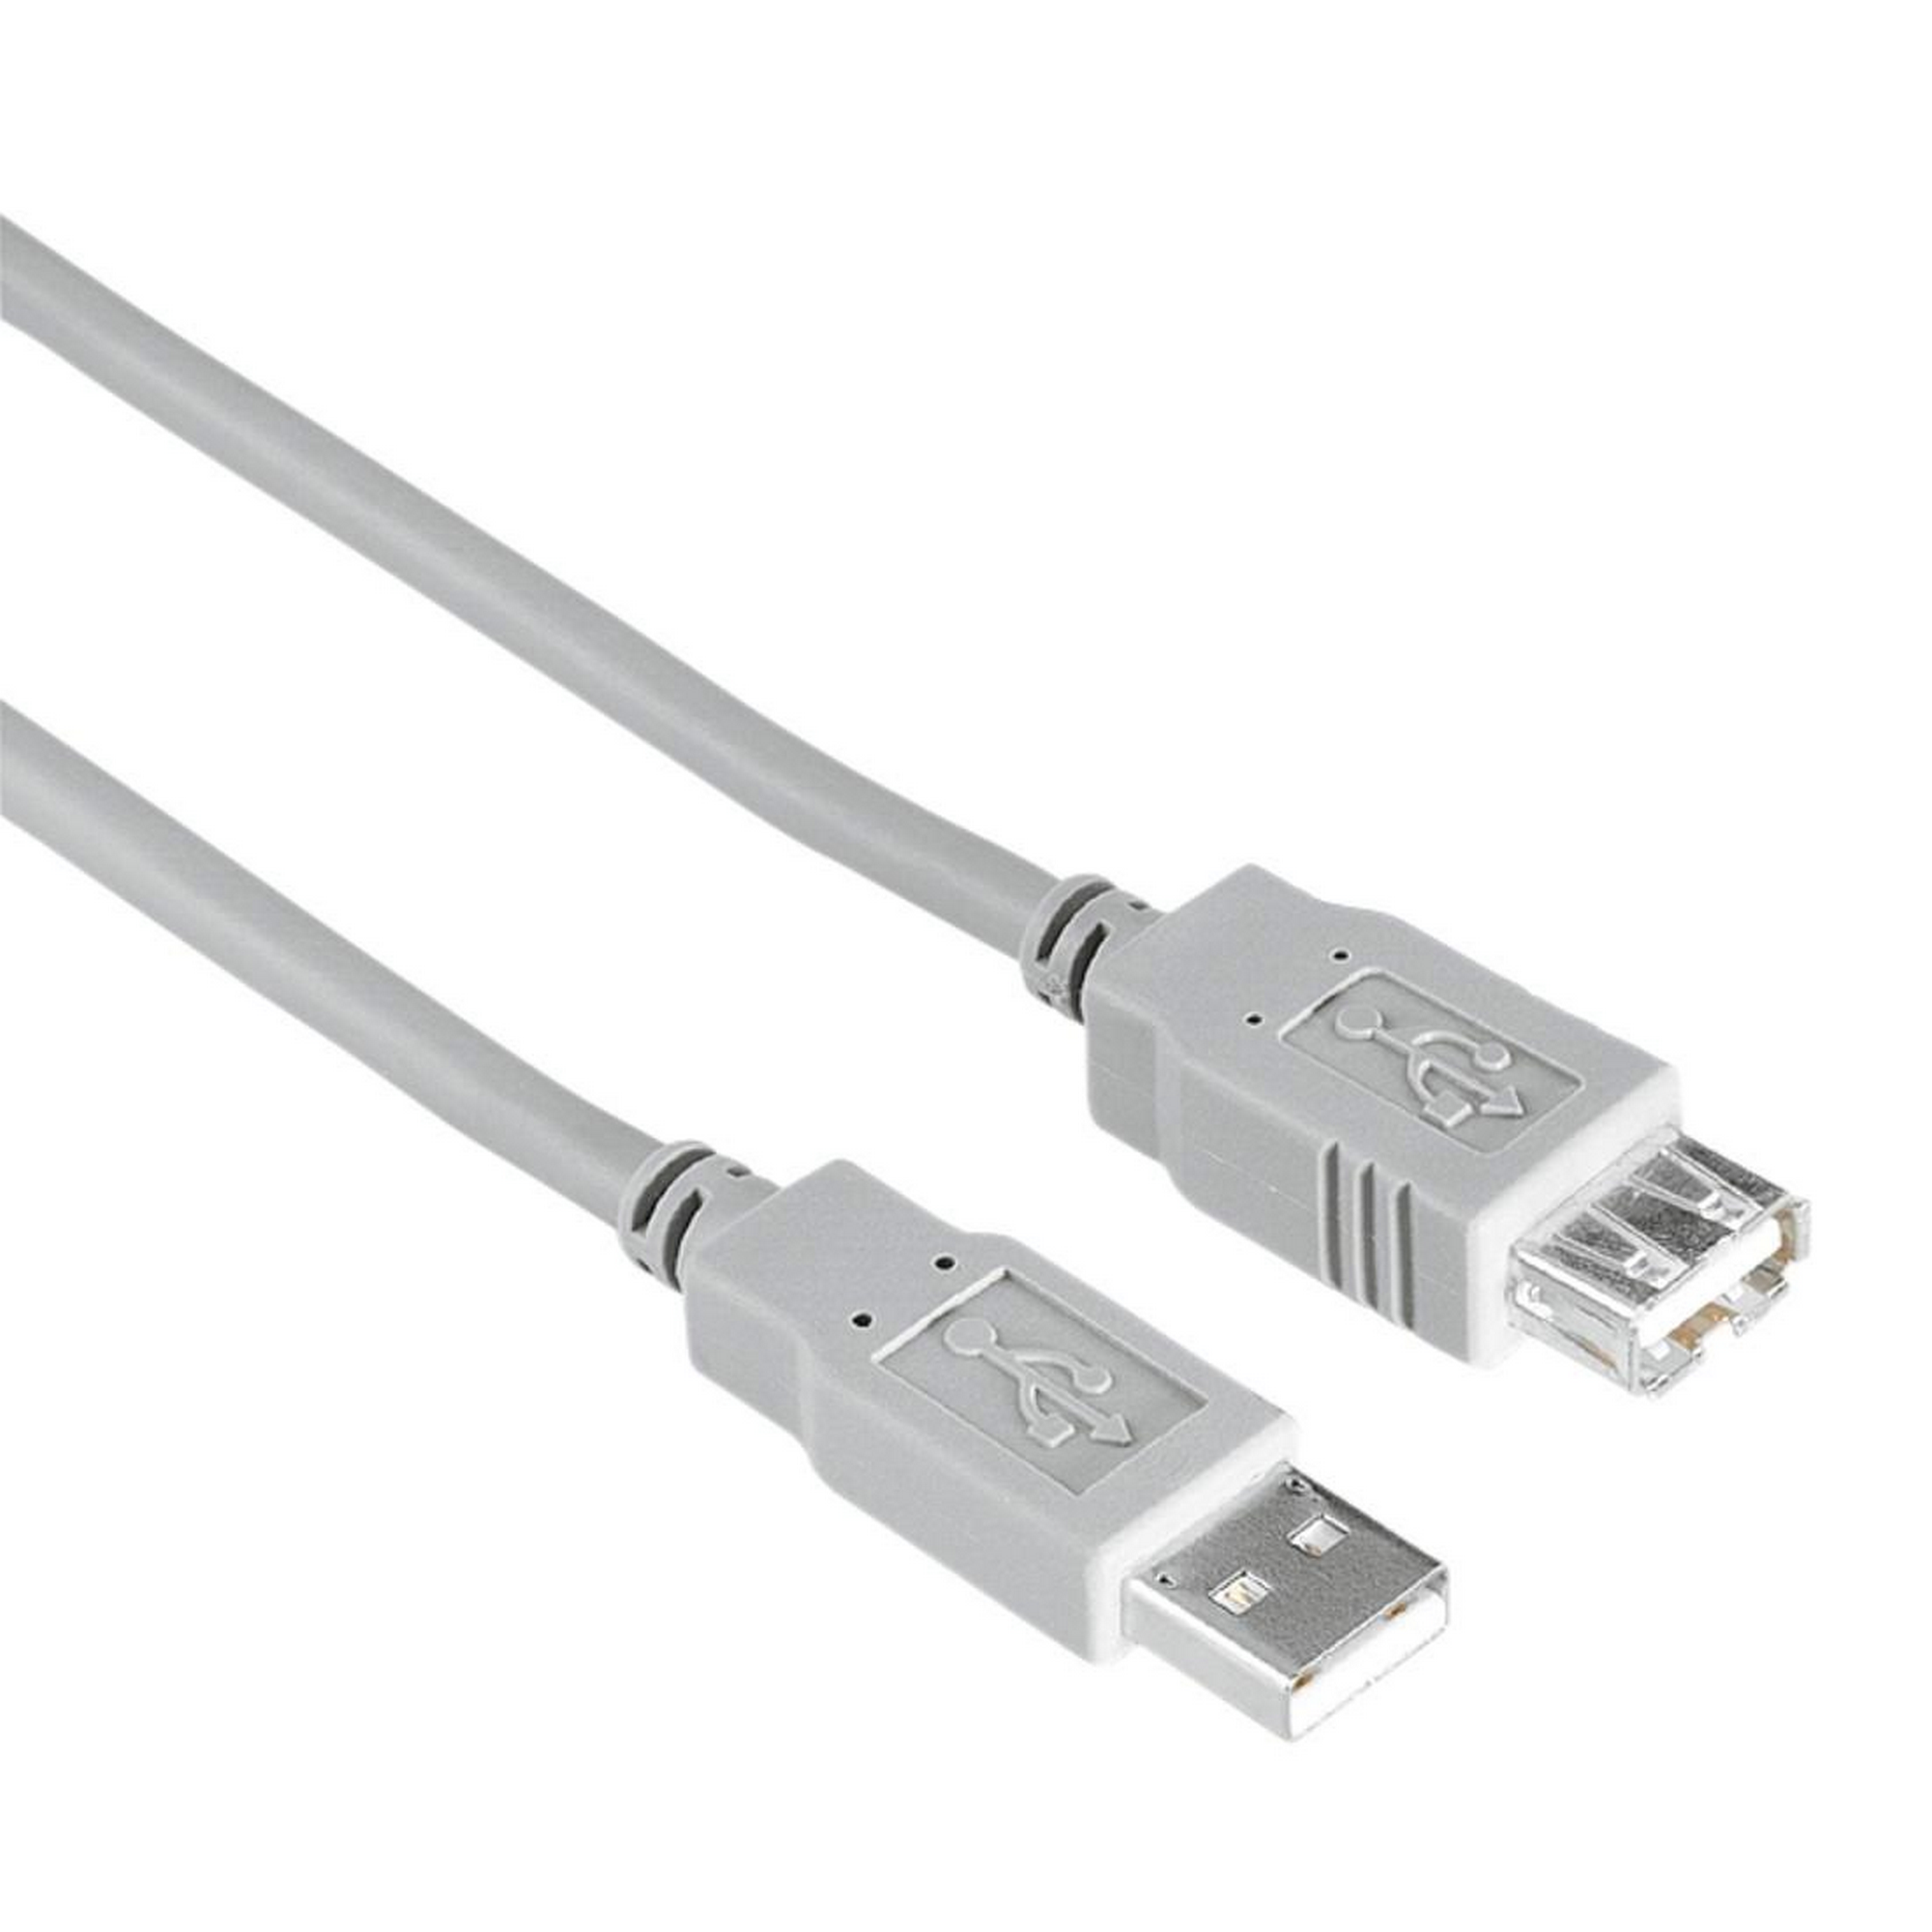 USB-Verlängerungskabel, USB 2.0 grau 3 m + product picture